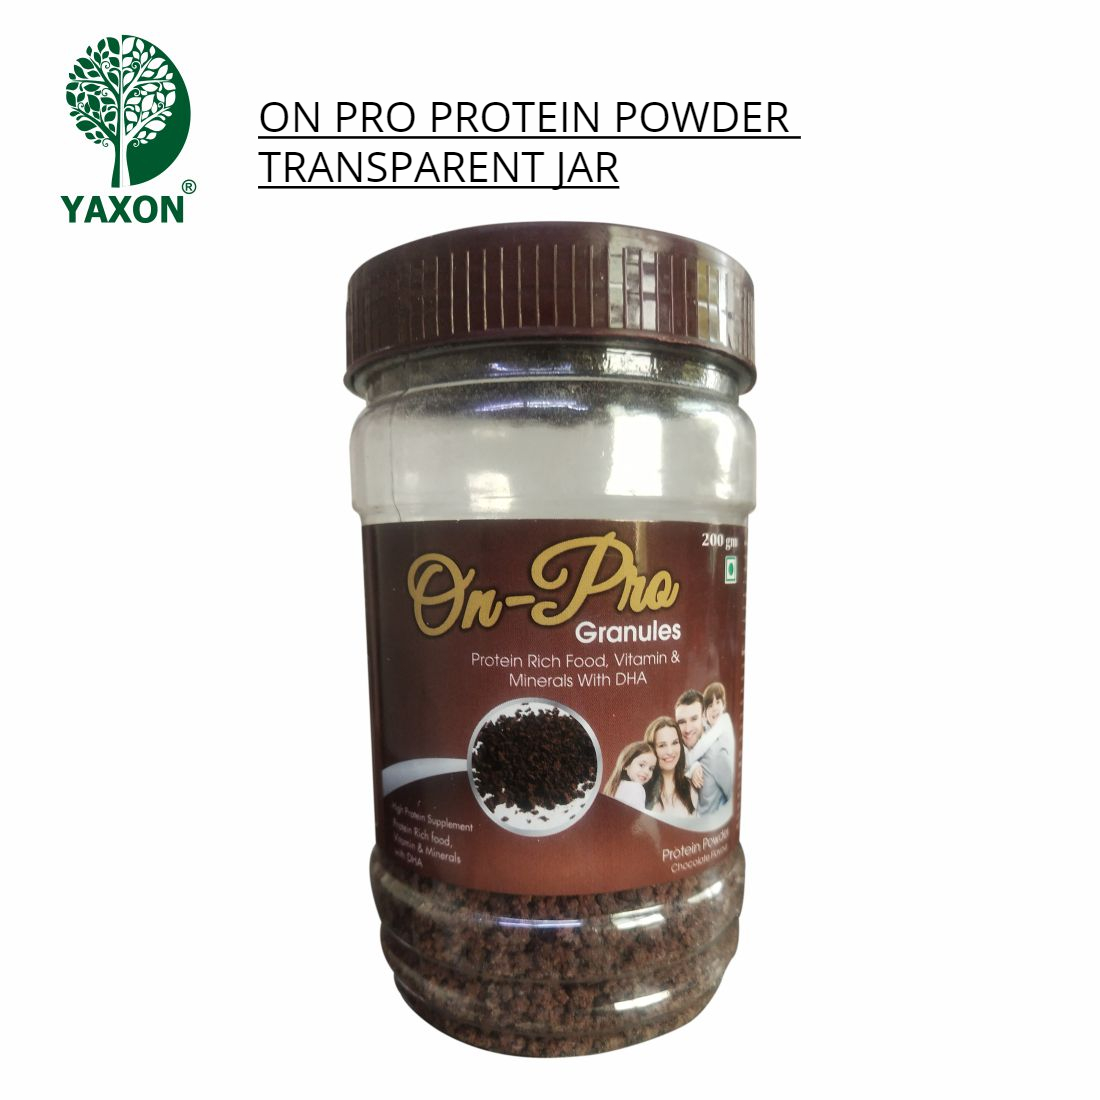 YAXON ON PRO Chocolate Protein Powder Transparent Jar